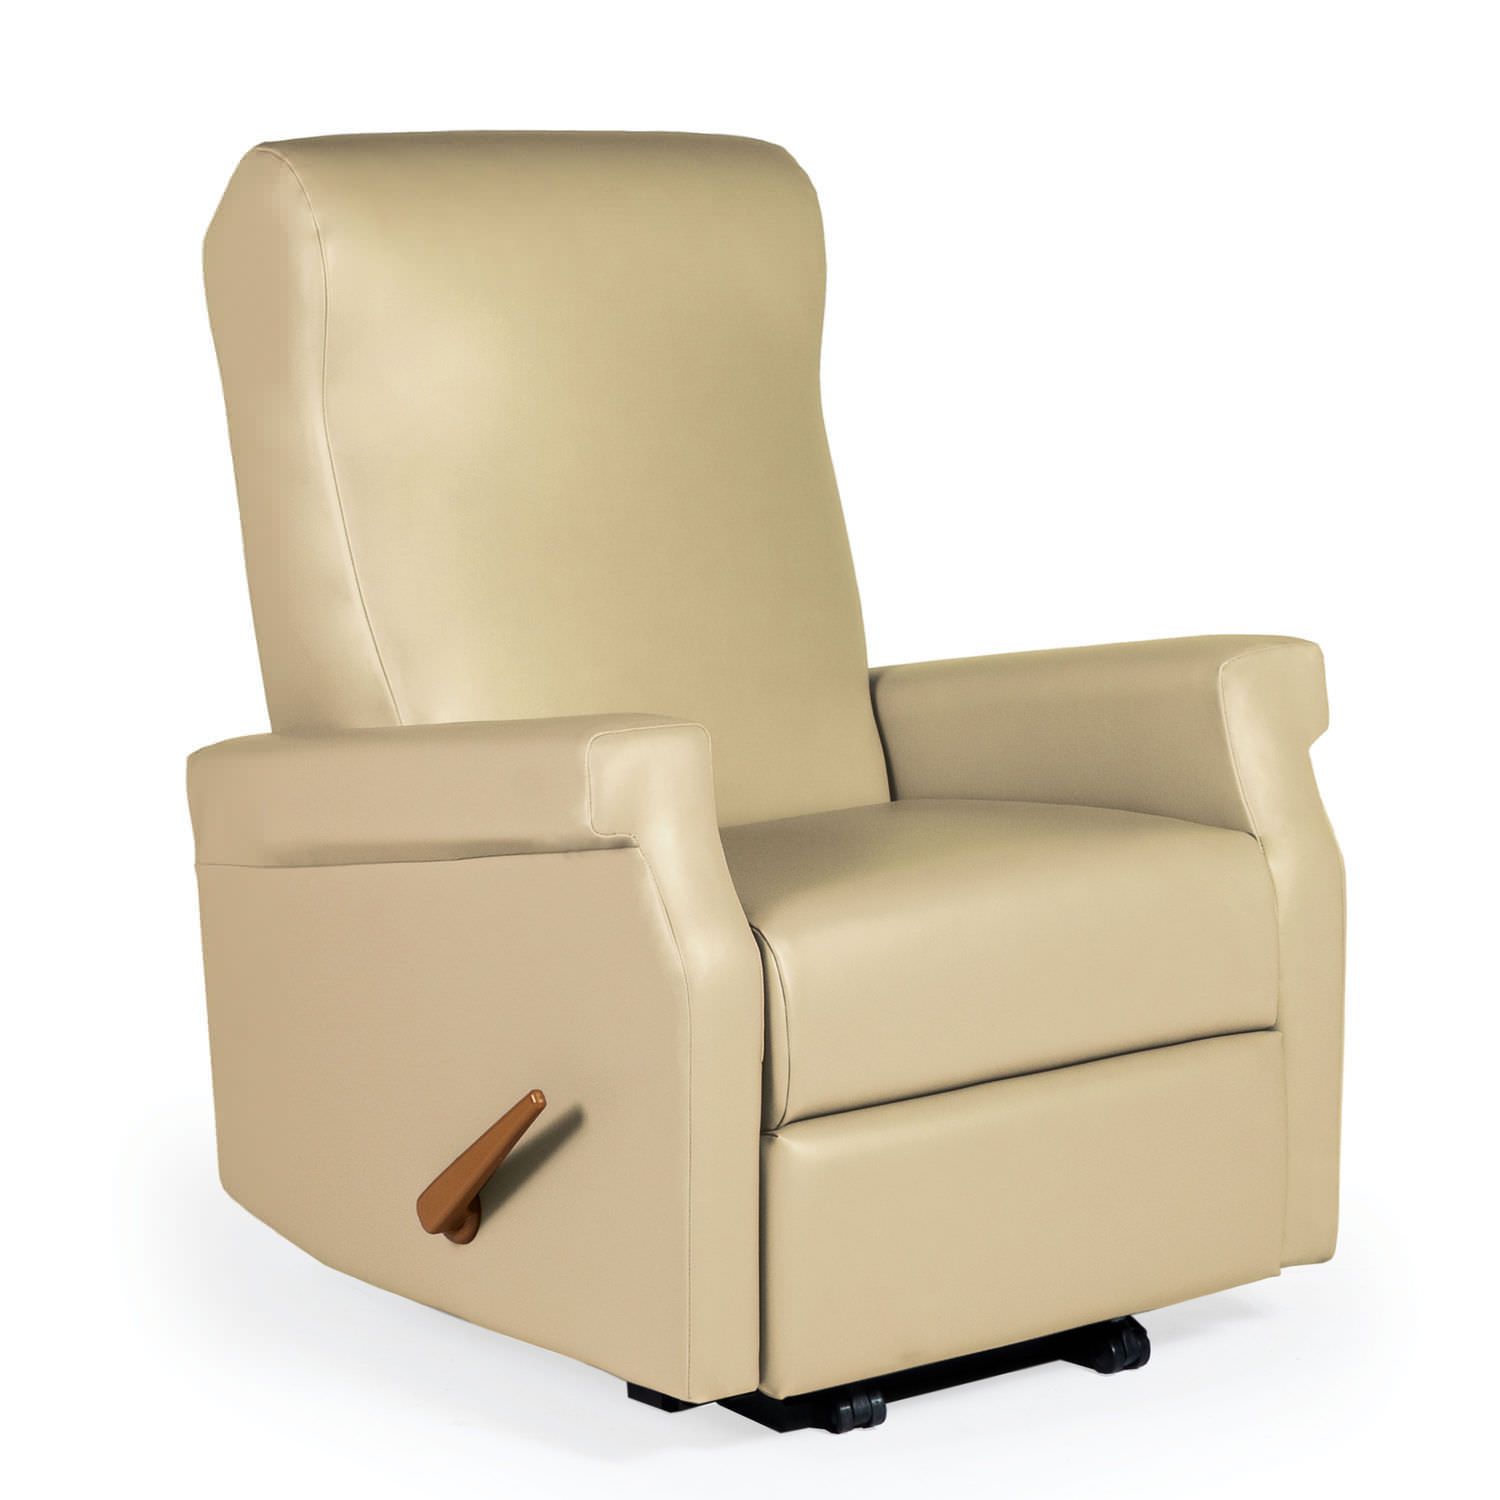 Healthcare facility convertible chair Regal III RG1304, Regal III RG1305 La-Z-Boy Contract Furniture